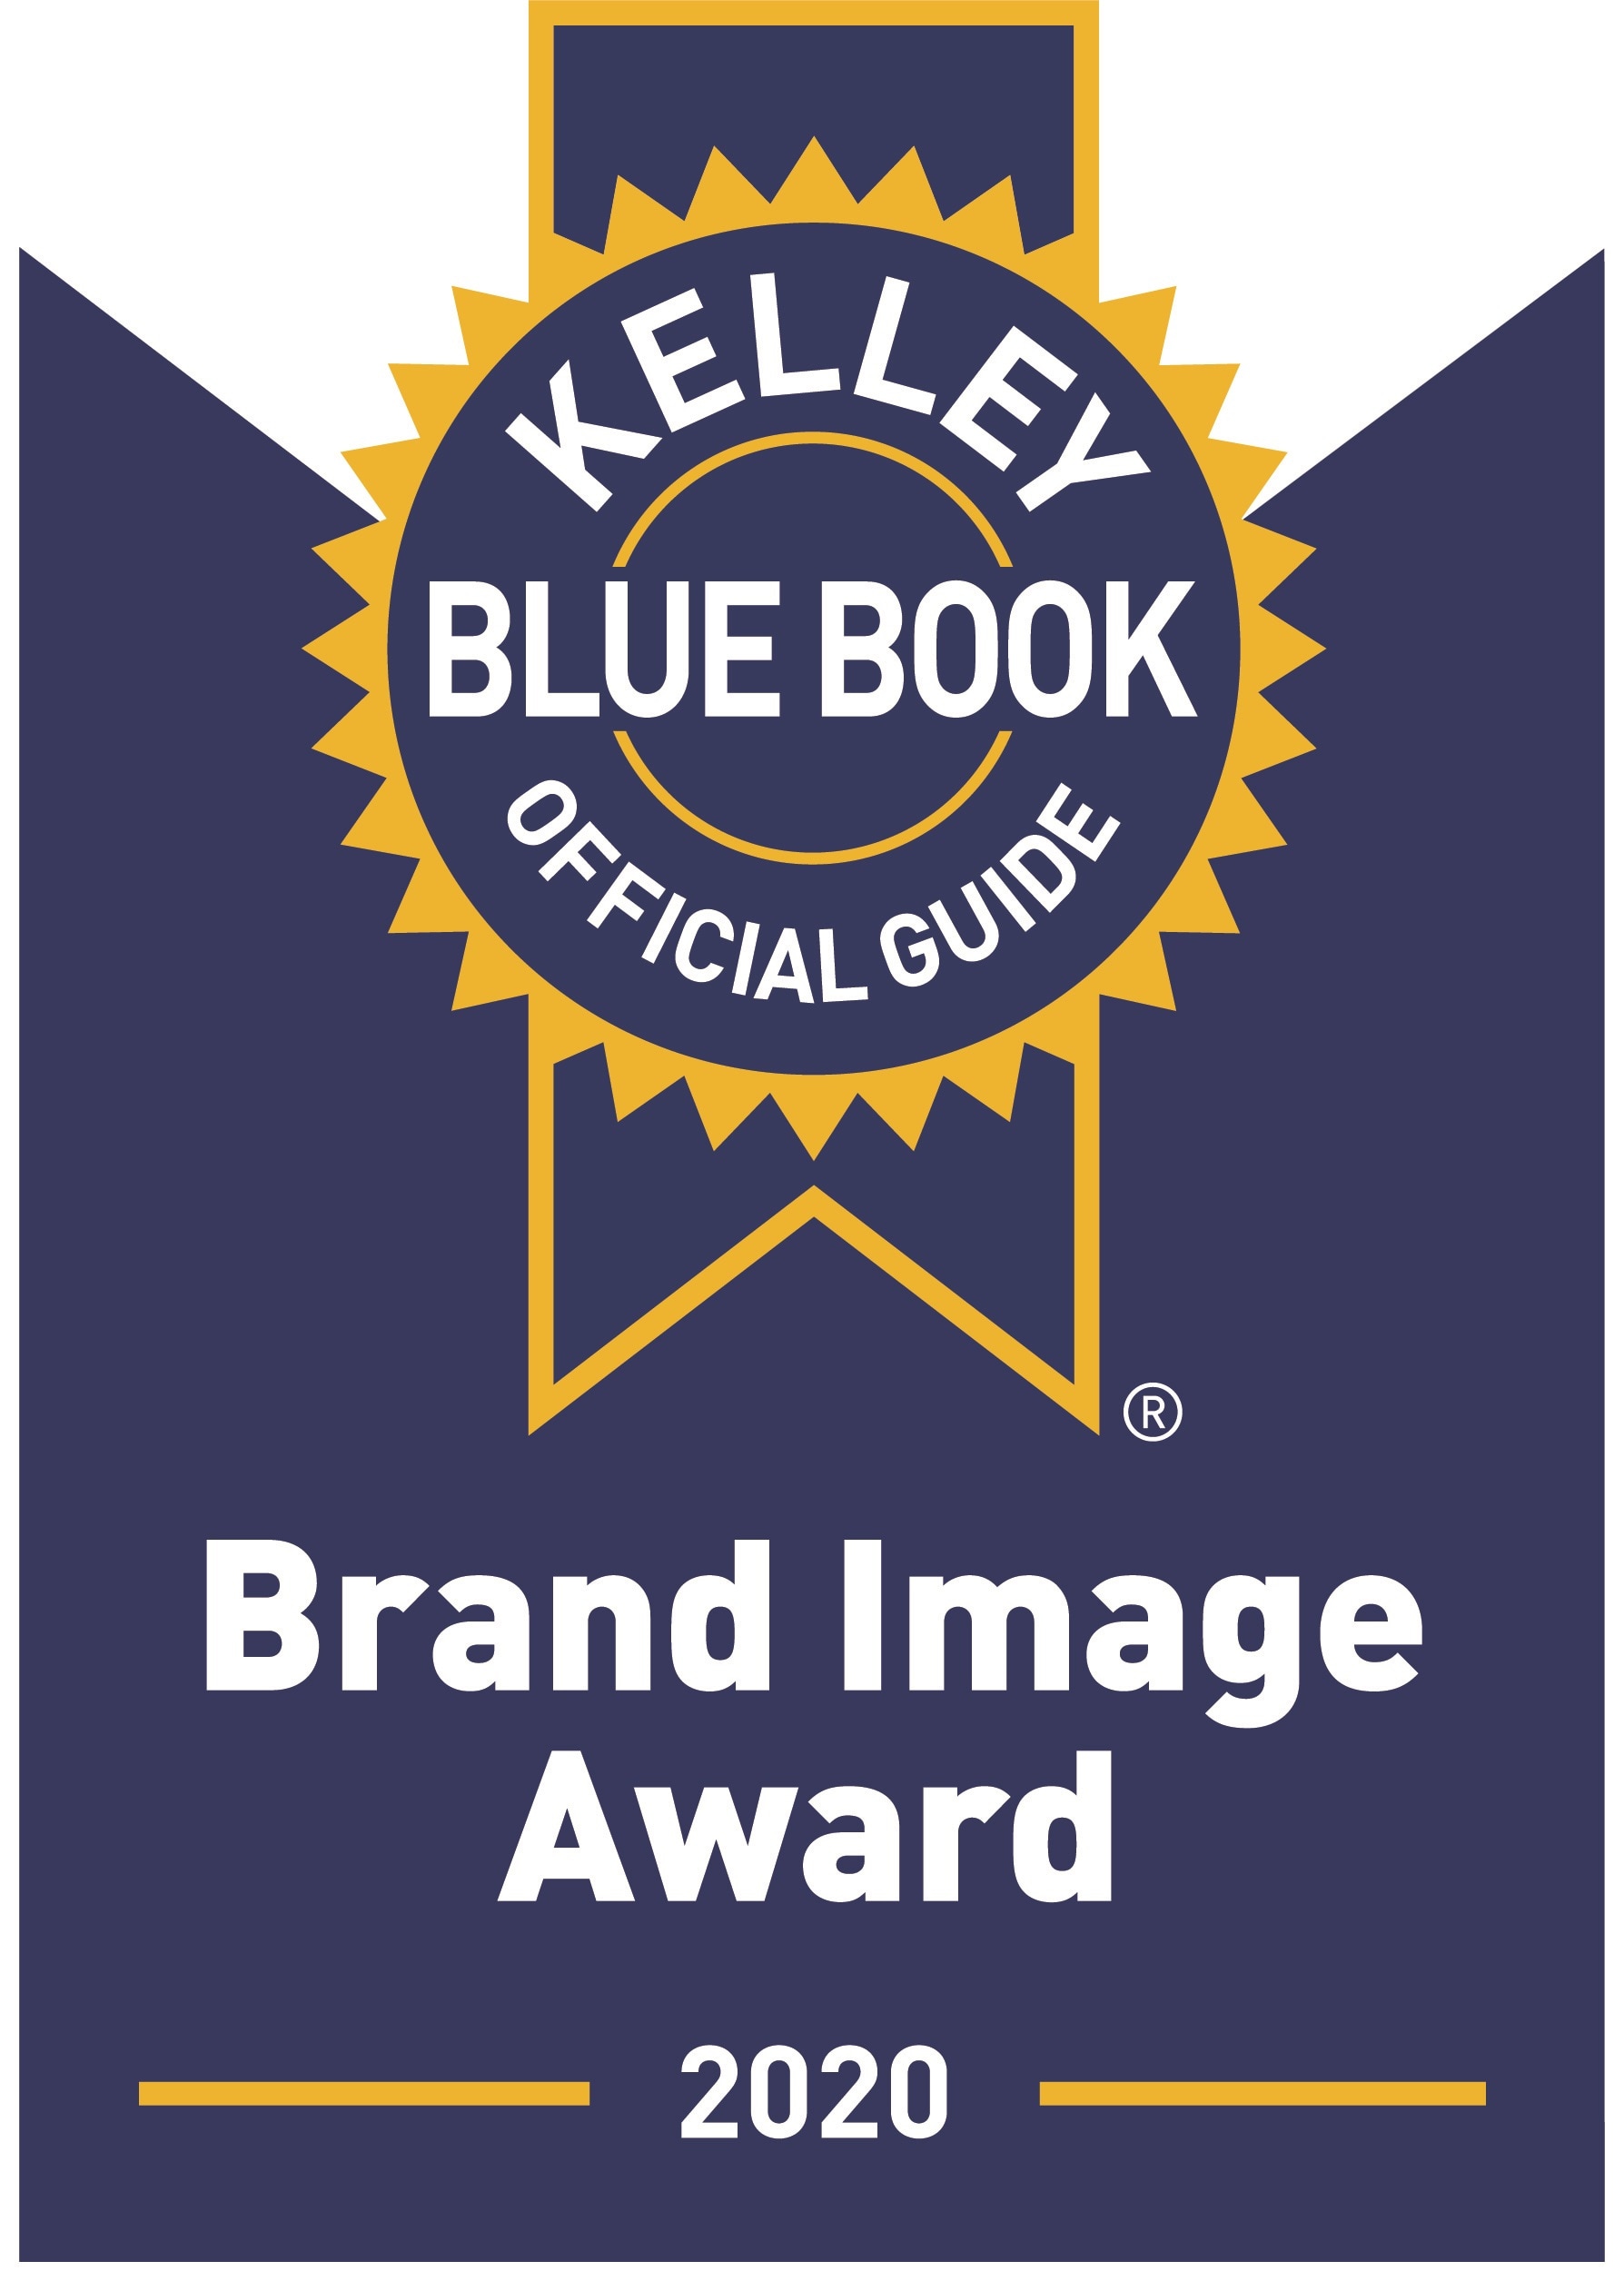 Kelly Blue Book Brand Image Award 2020